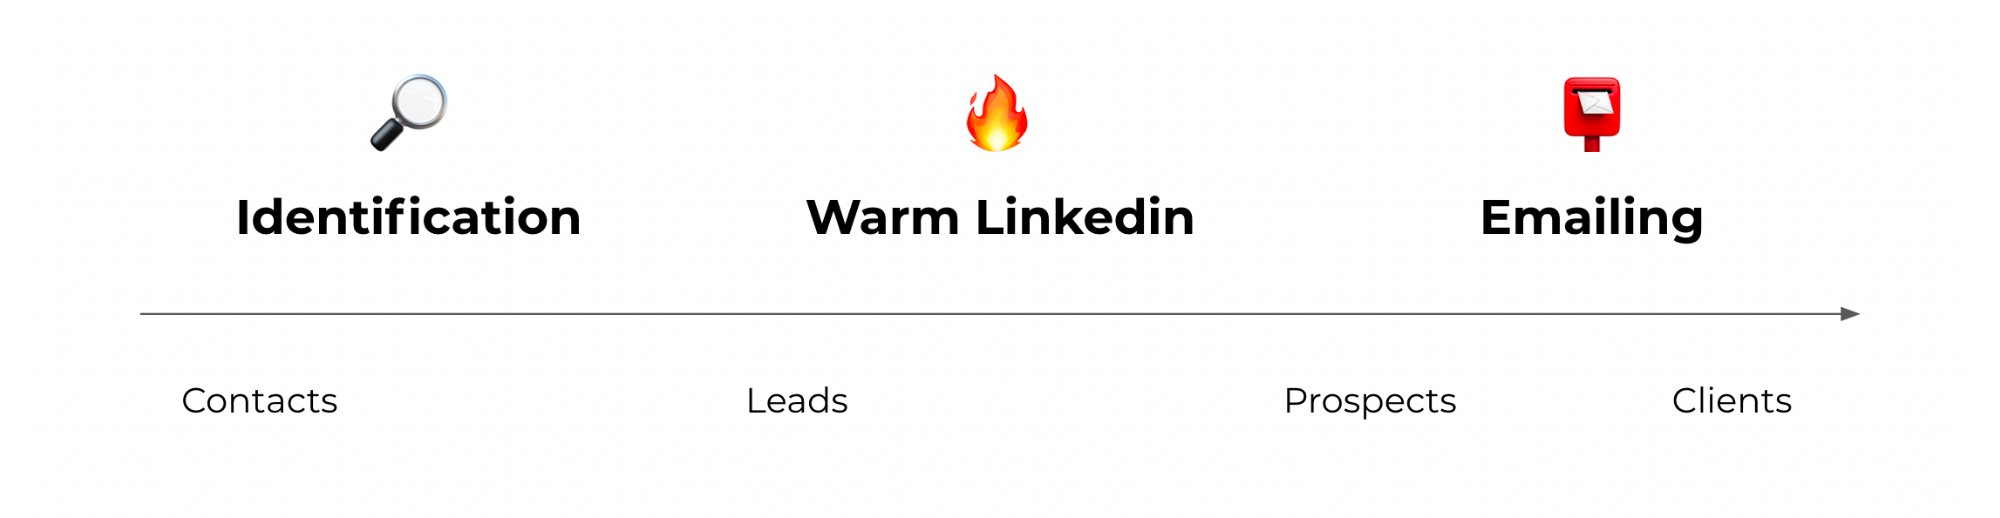 Linkedin Warming